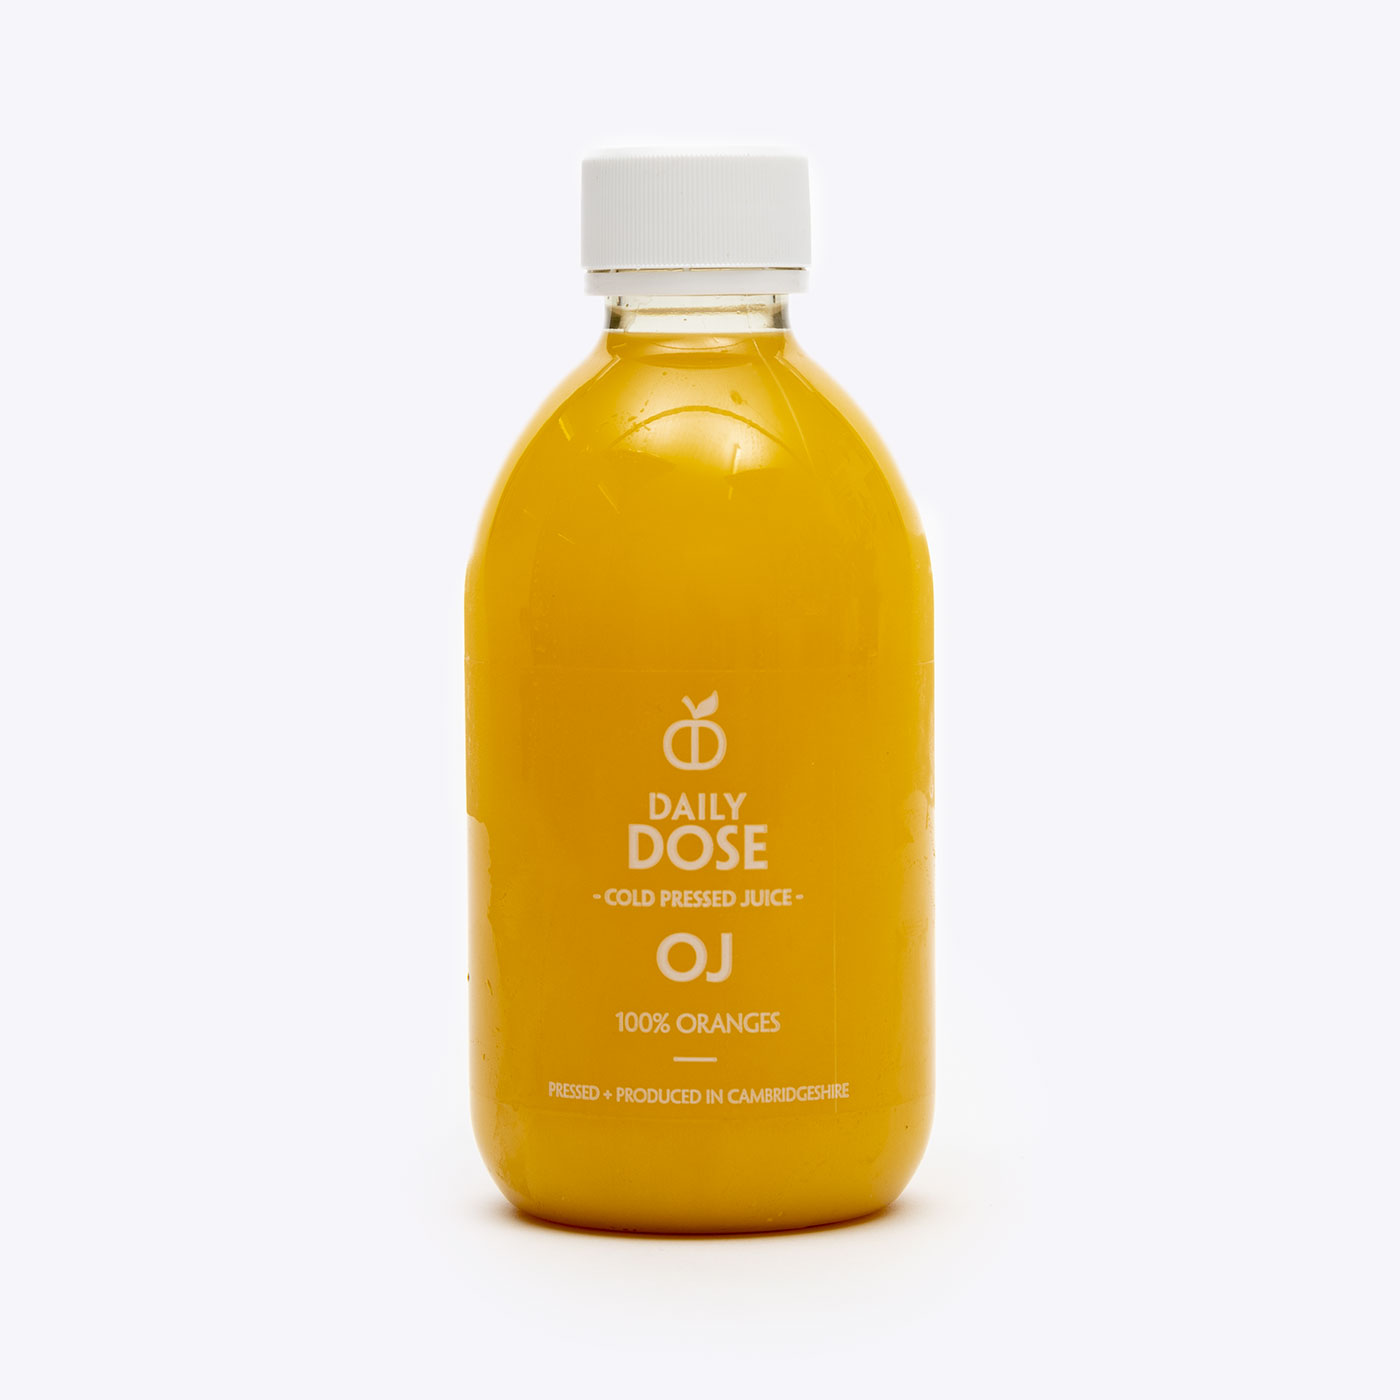 Daily Dose Orange Juice